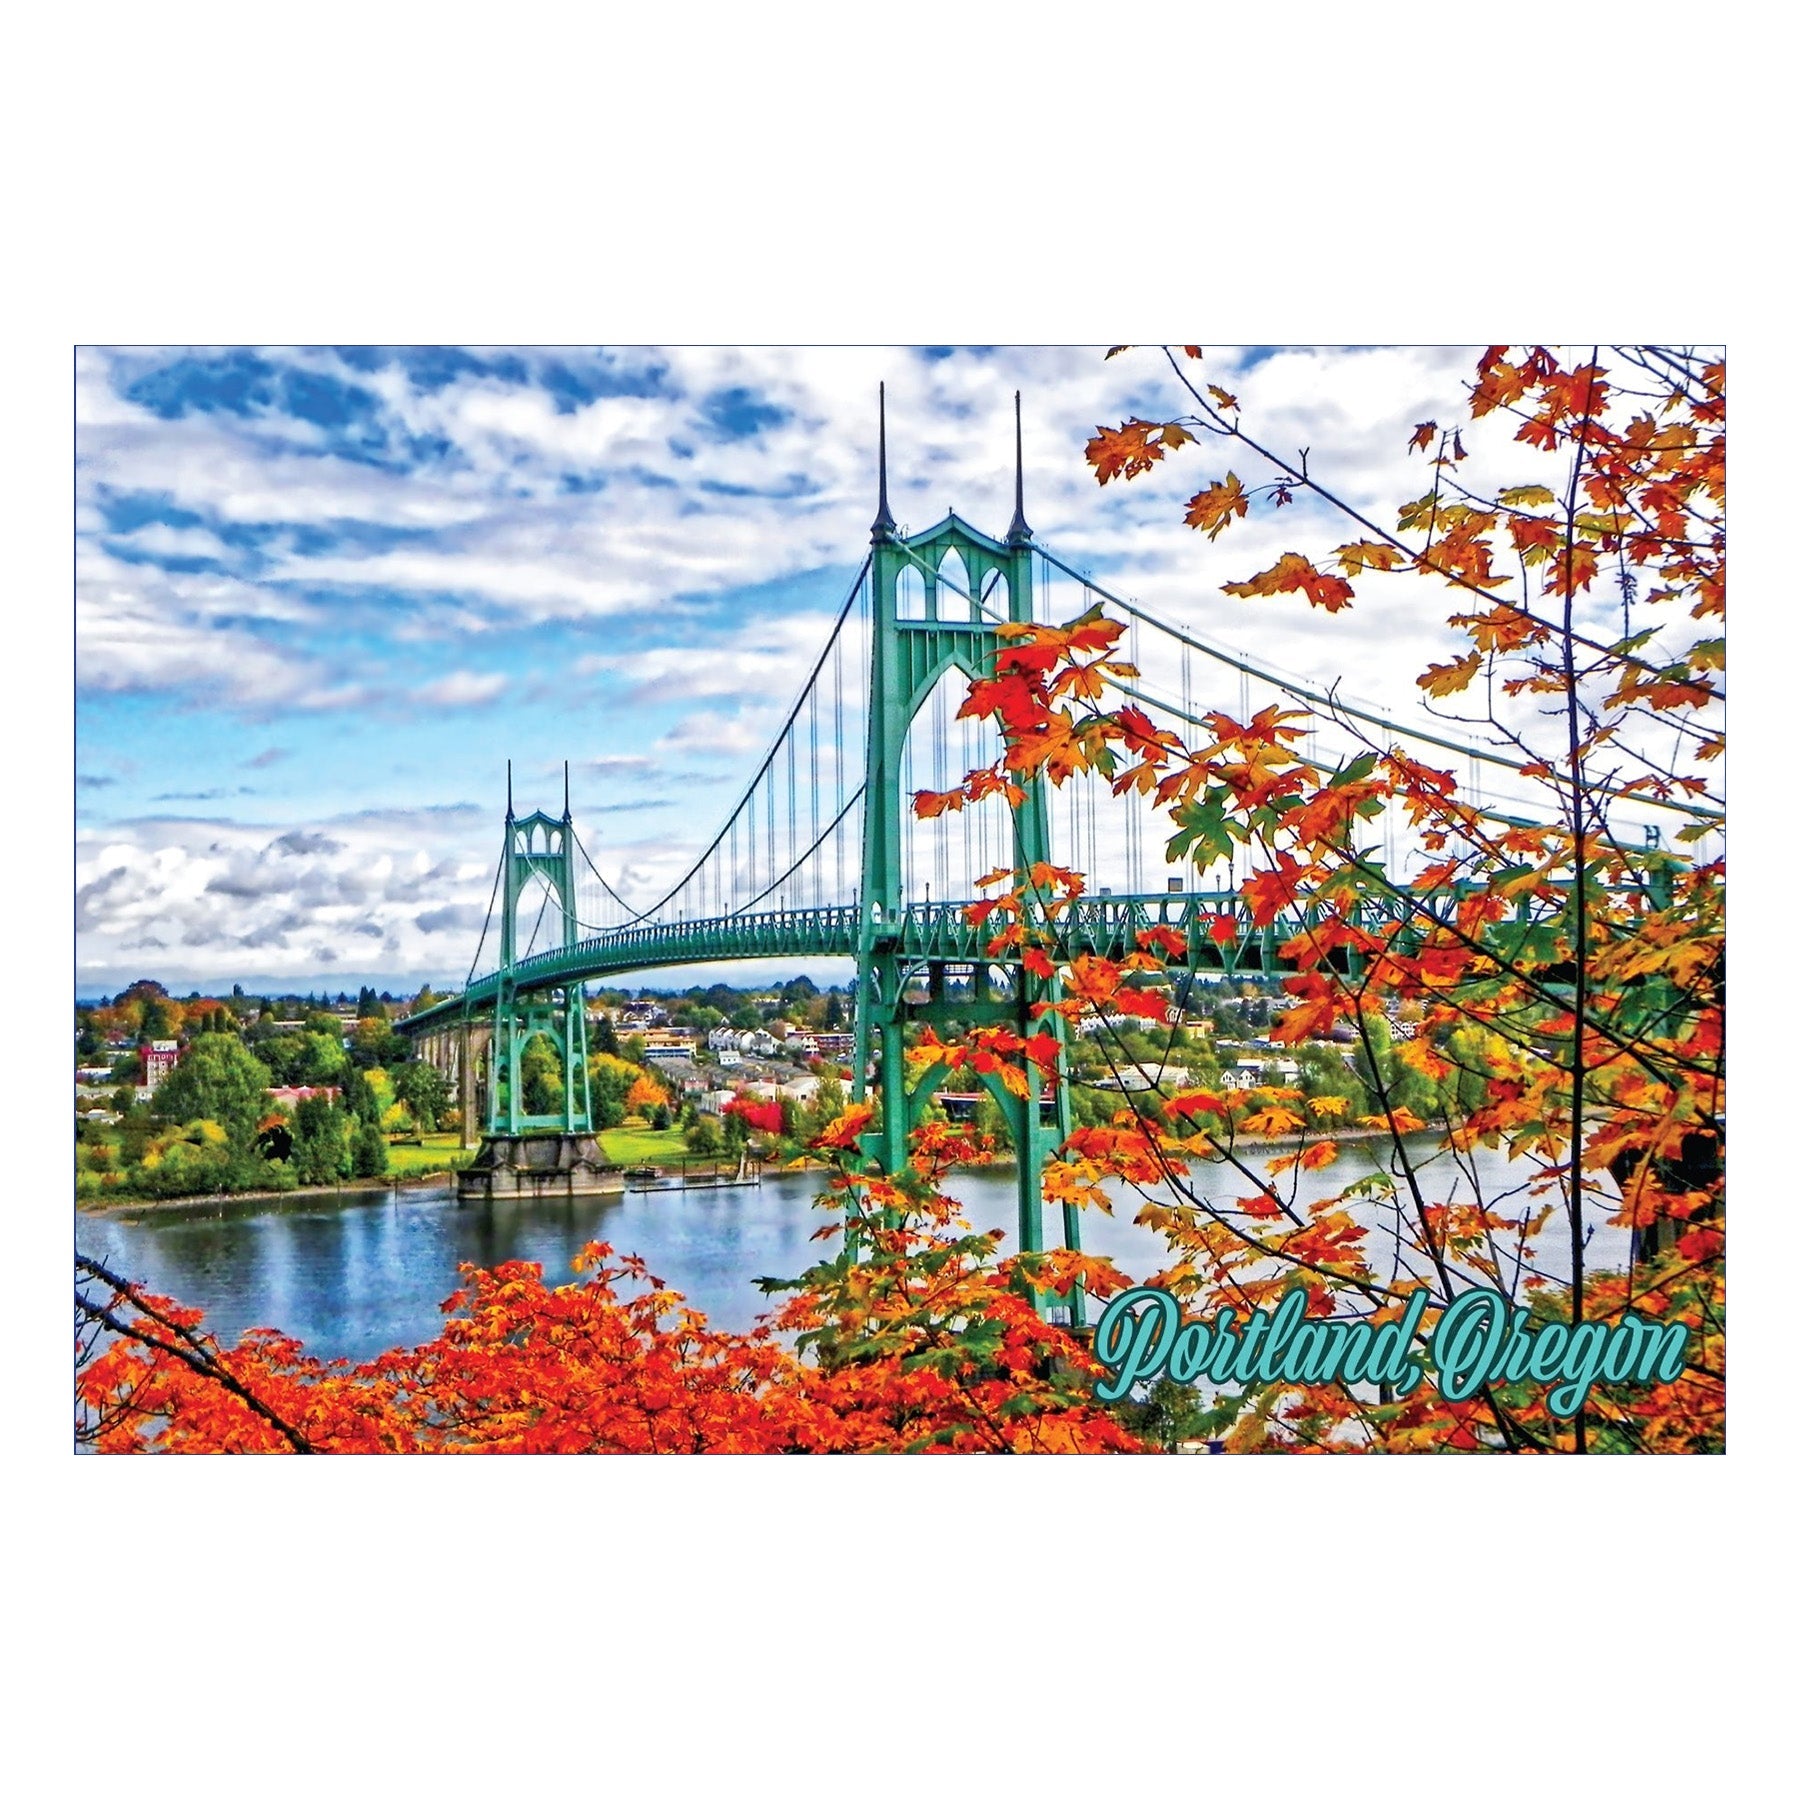 St Johns Bridge Postcard - Postcards - Hello From Oregon